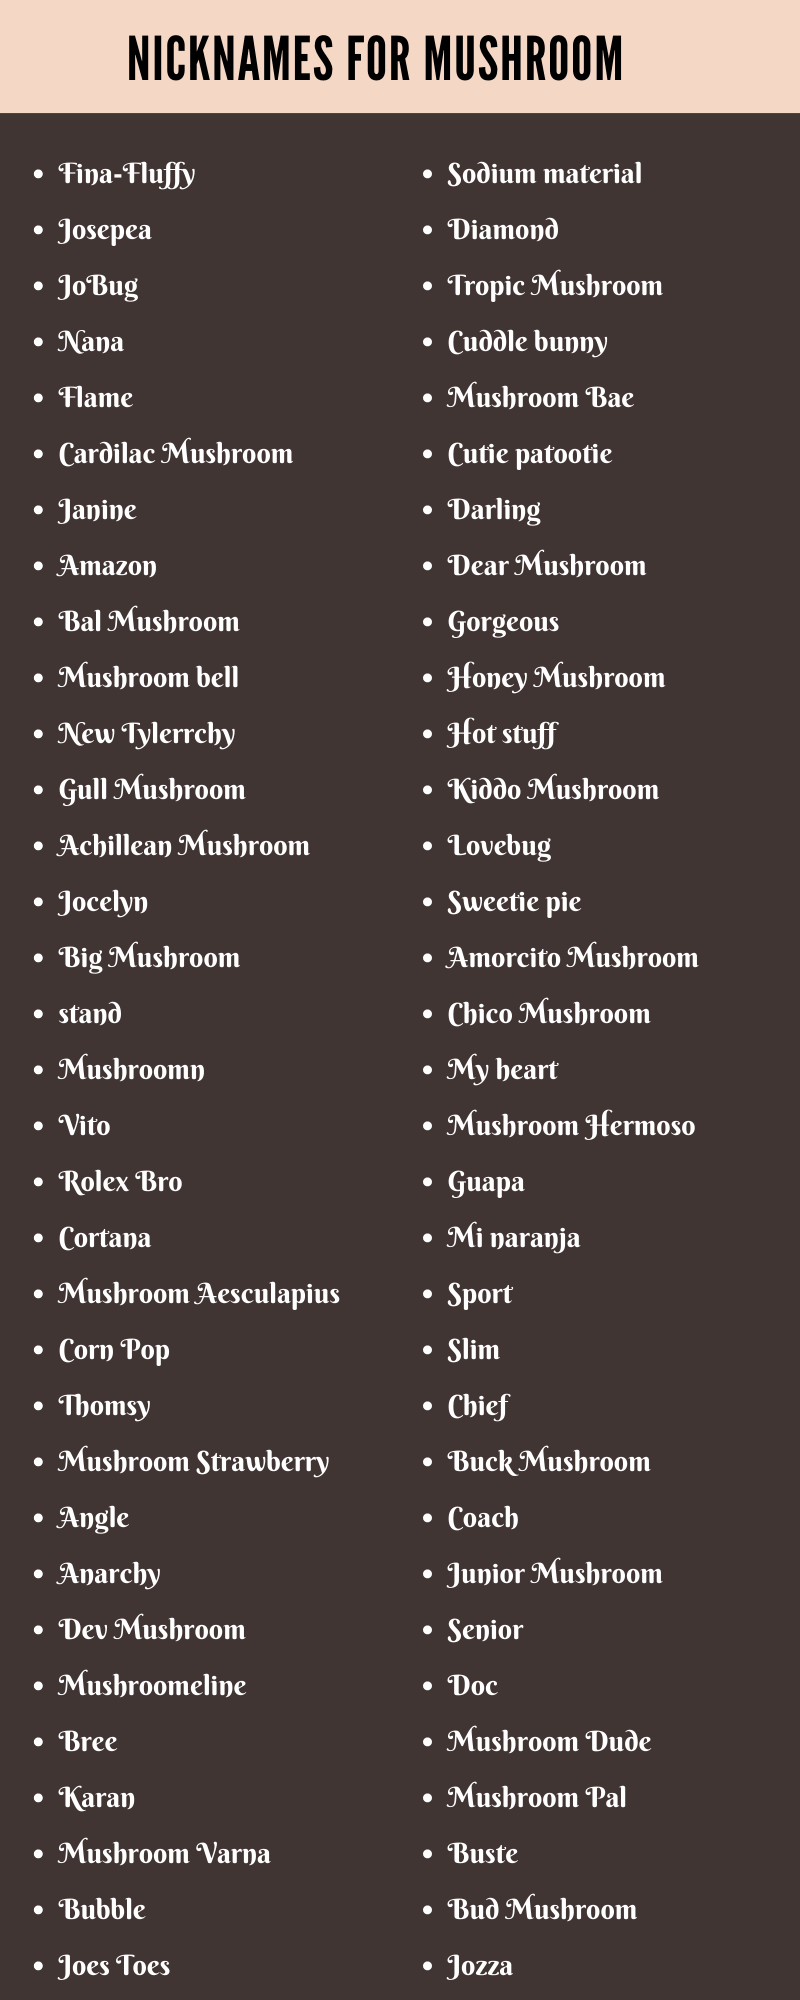 Nicknames For Mushroom